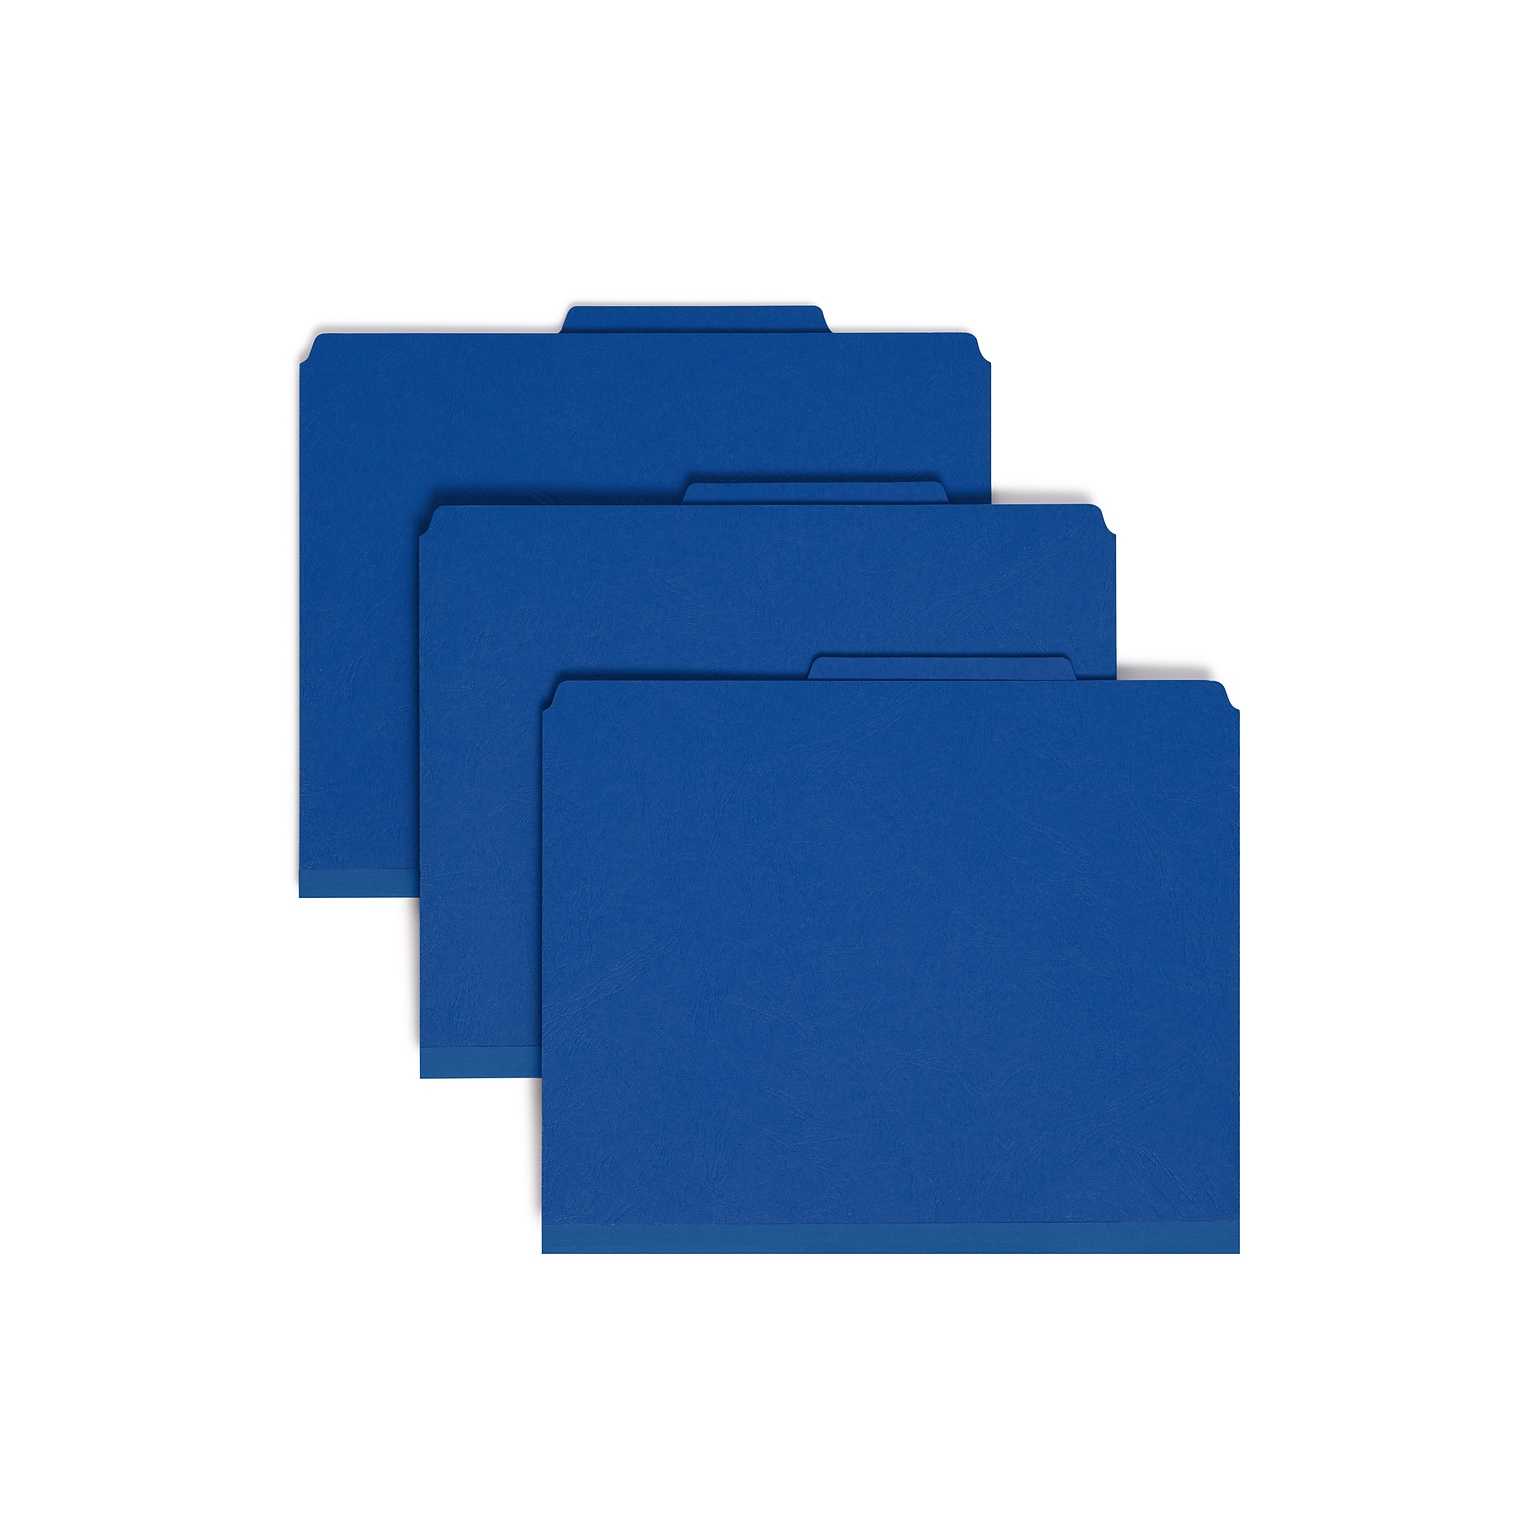 Smead Premium Pressboard Classification Folder with SafeSHIELD® Fasteners, Letter Size, Dark Blue, 10/BX (14200)